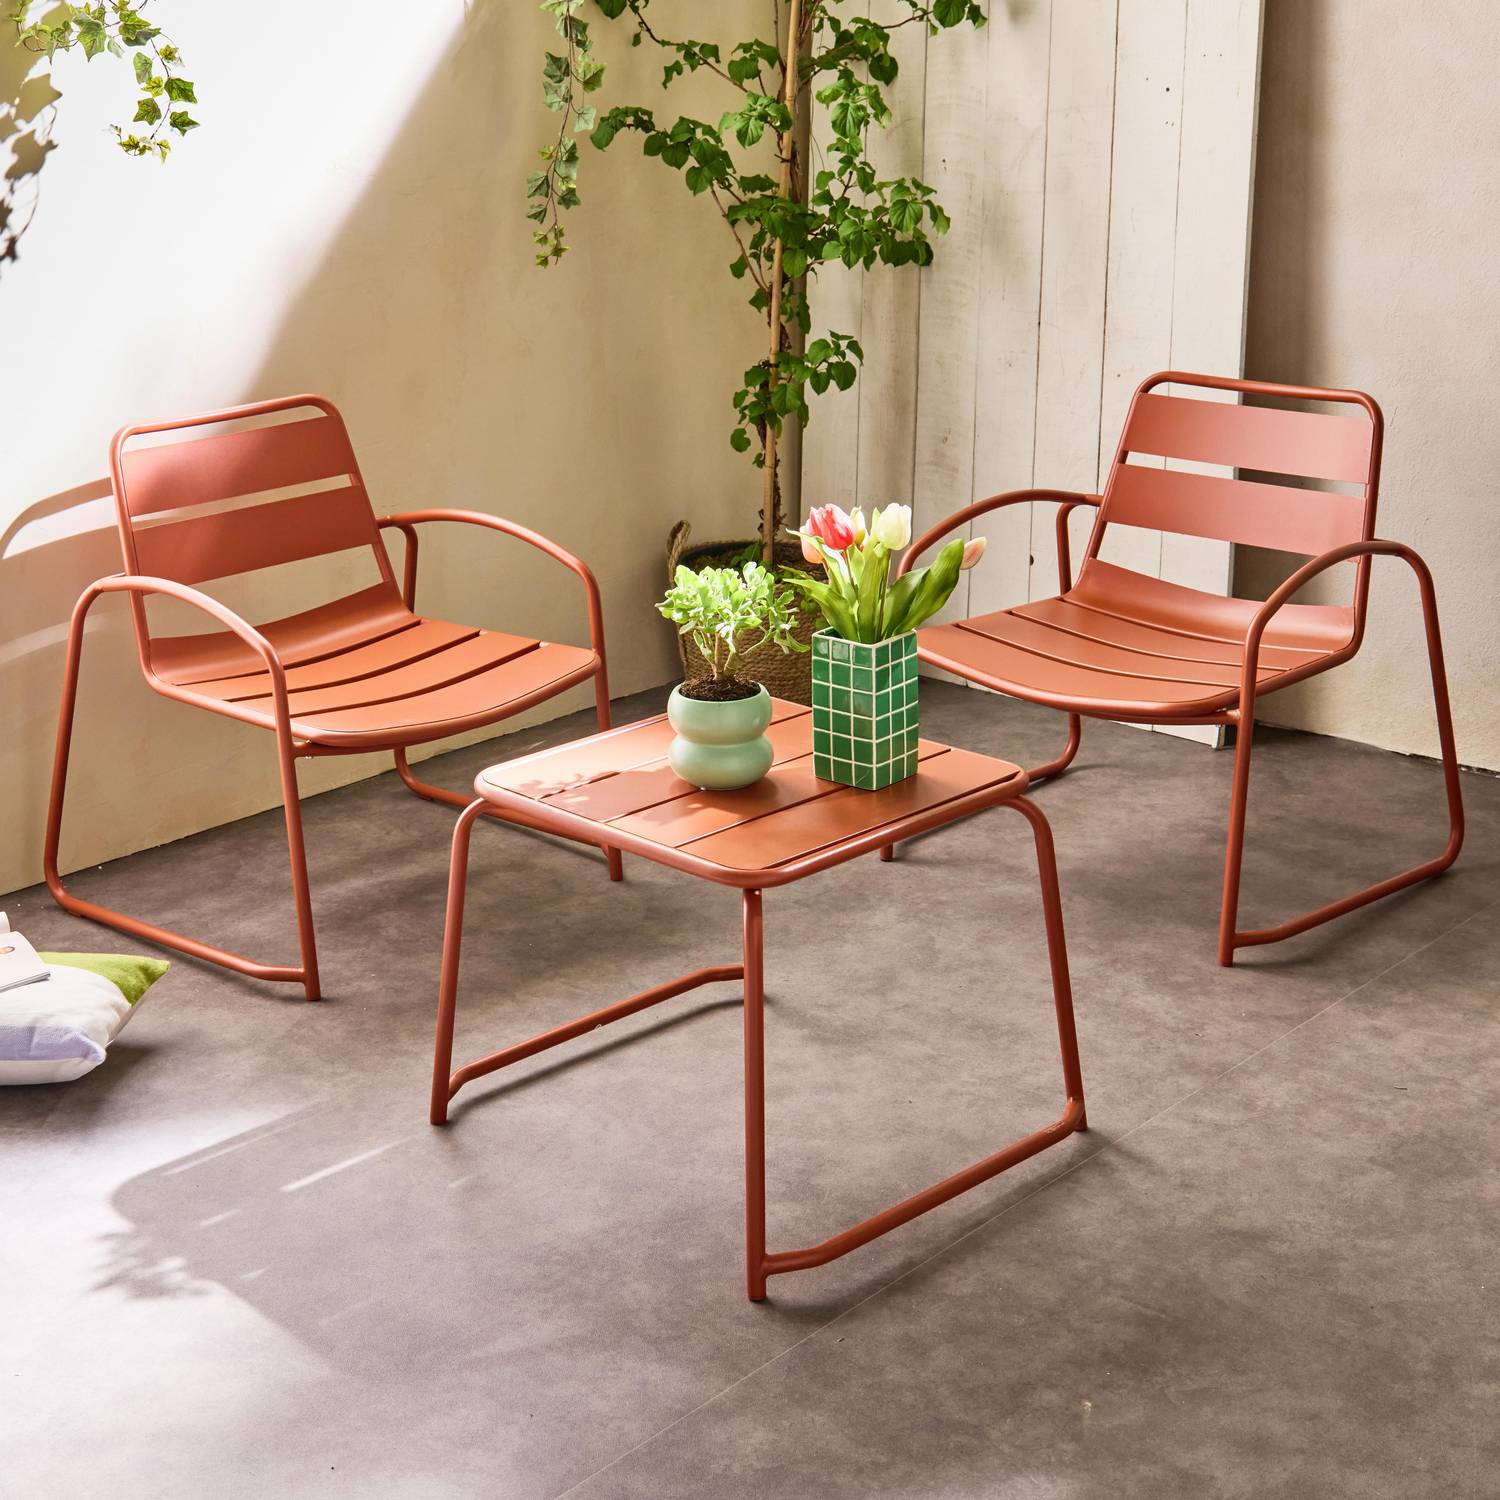 Suzana terracotta tuinset, 2 stoelen 1 stalen bijzettafel Photo1